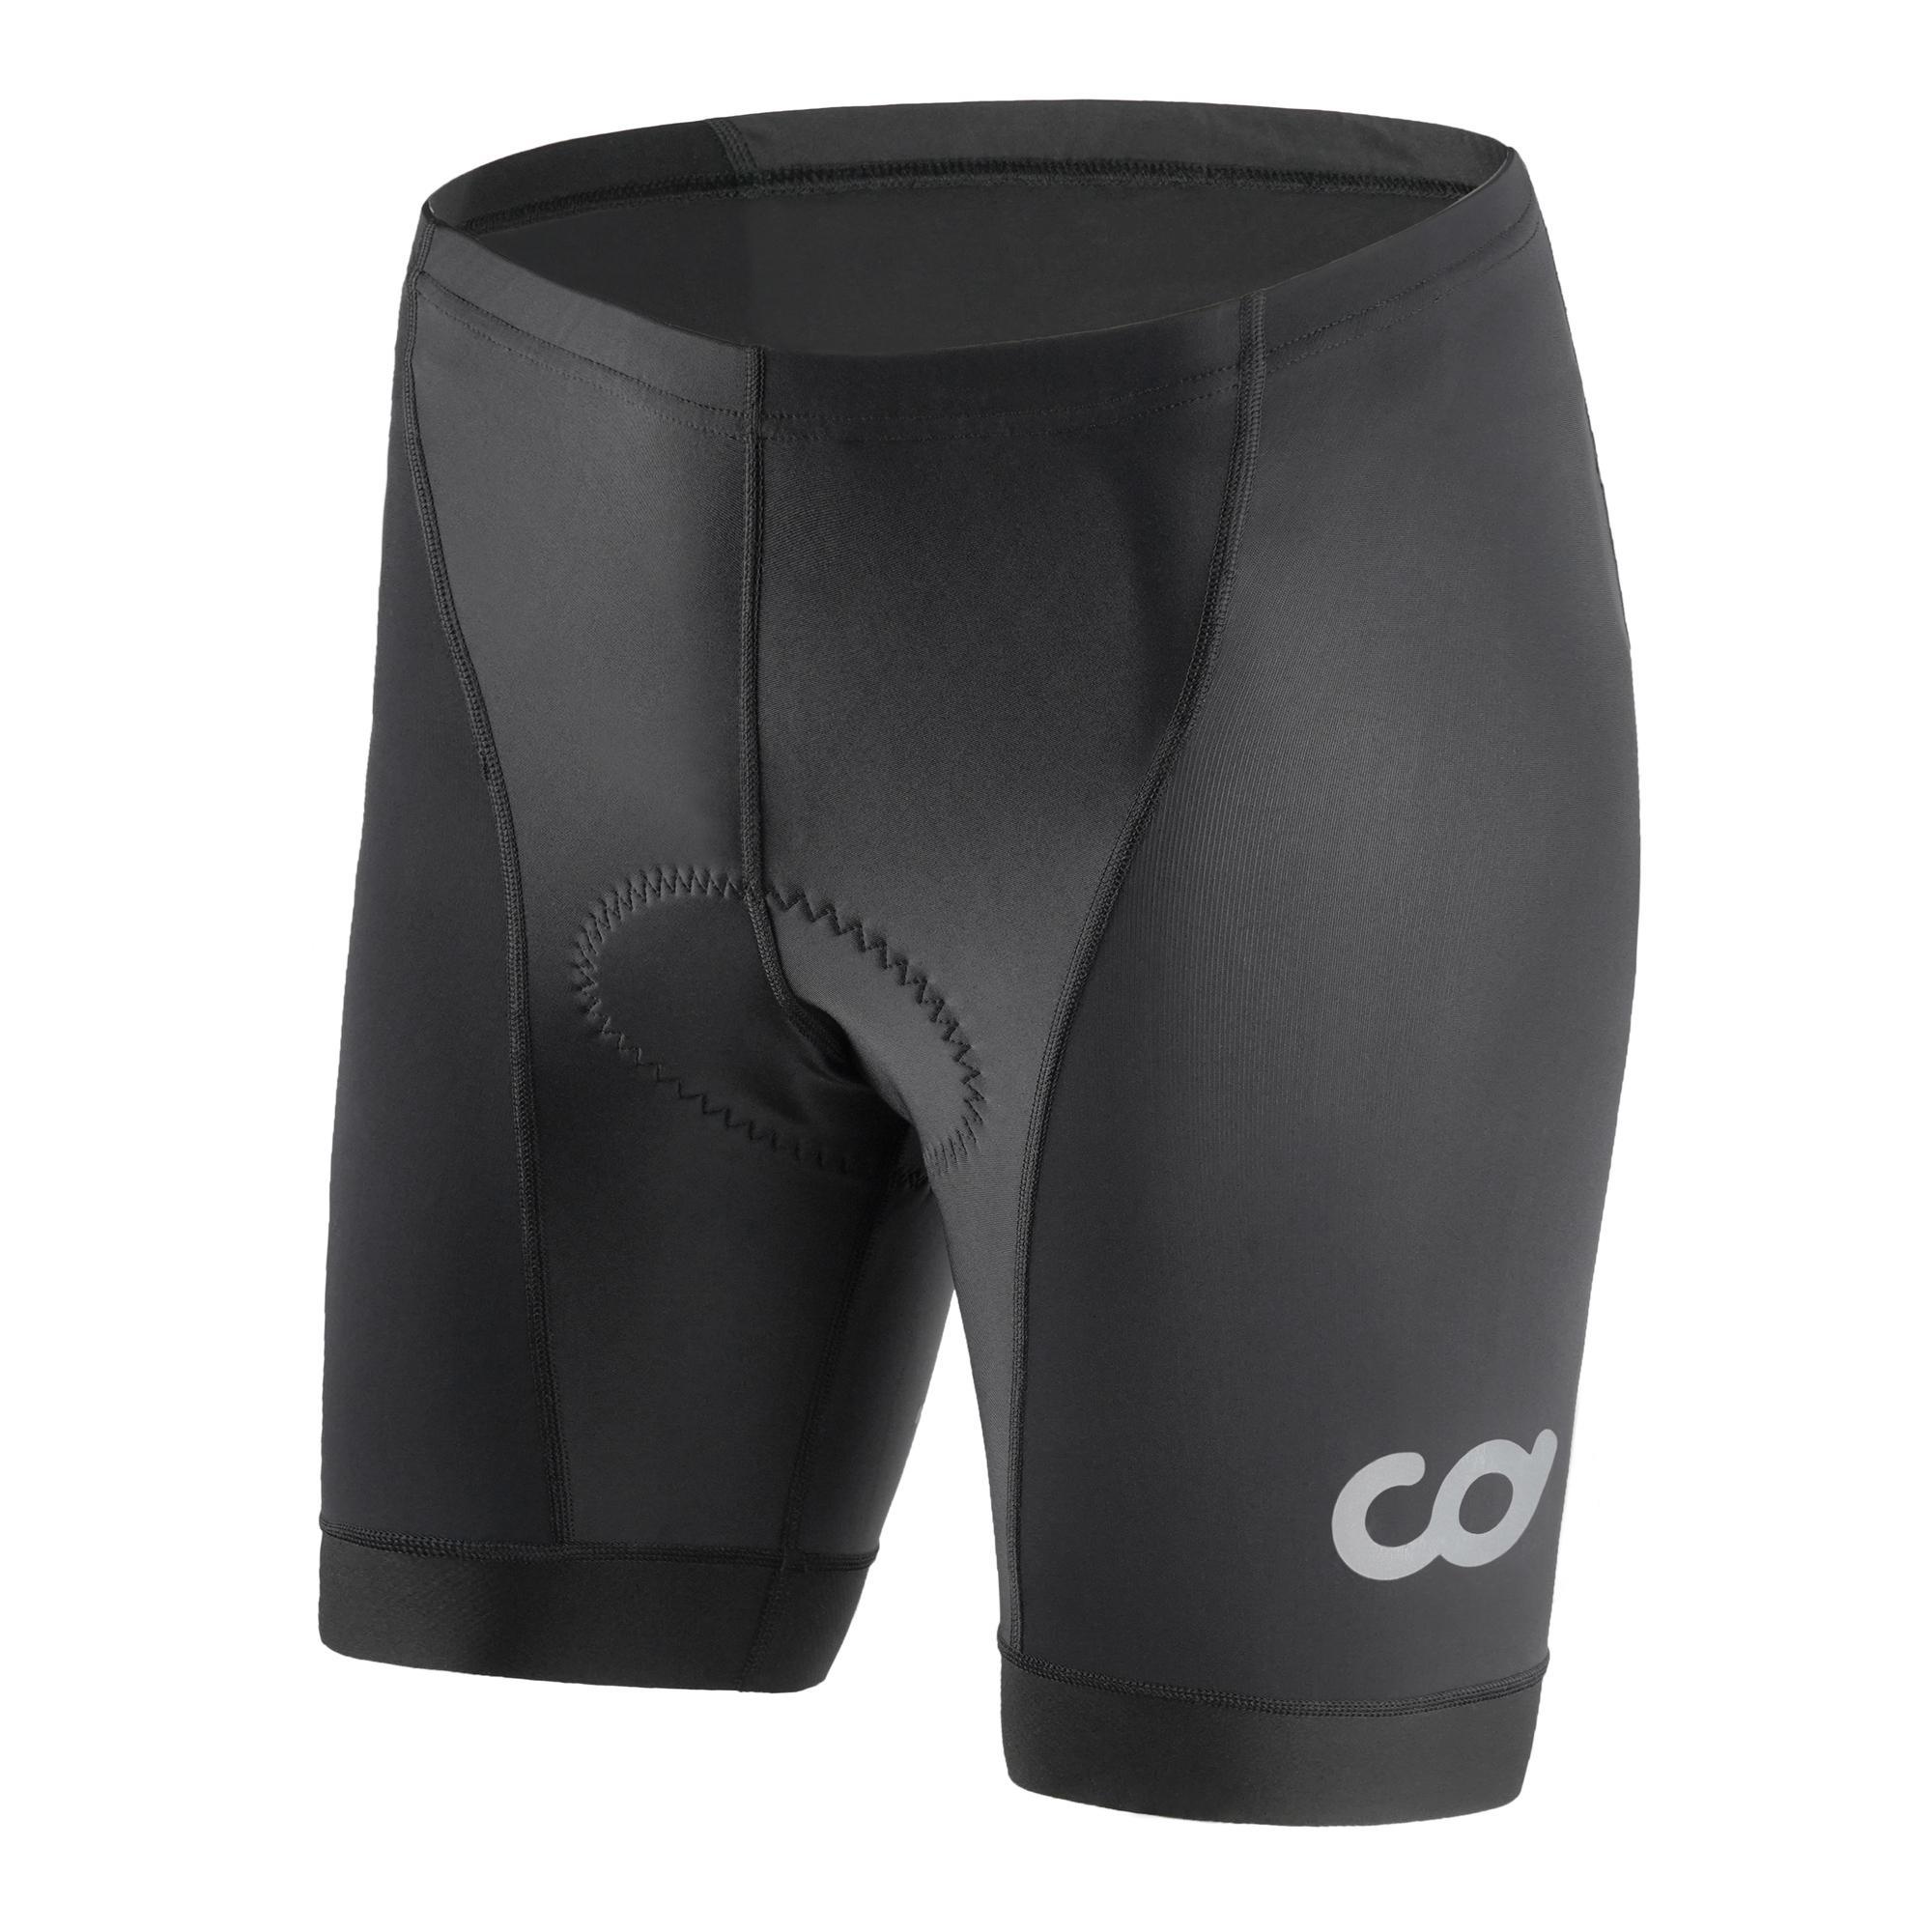 CD Men's Premium Quality Cycling Padded Shorts Pants with 3D Padding - High Waist Anti-slip Road MTB Bicycle Biking Riding Tights Underwear - Size L